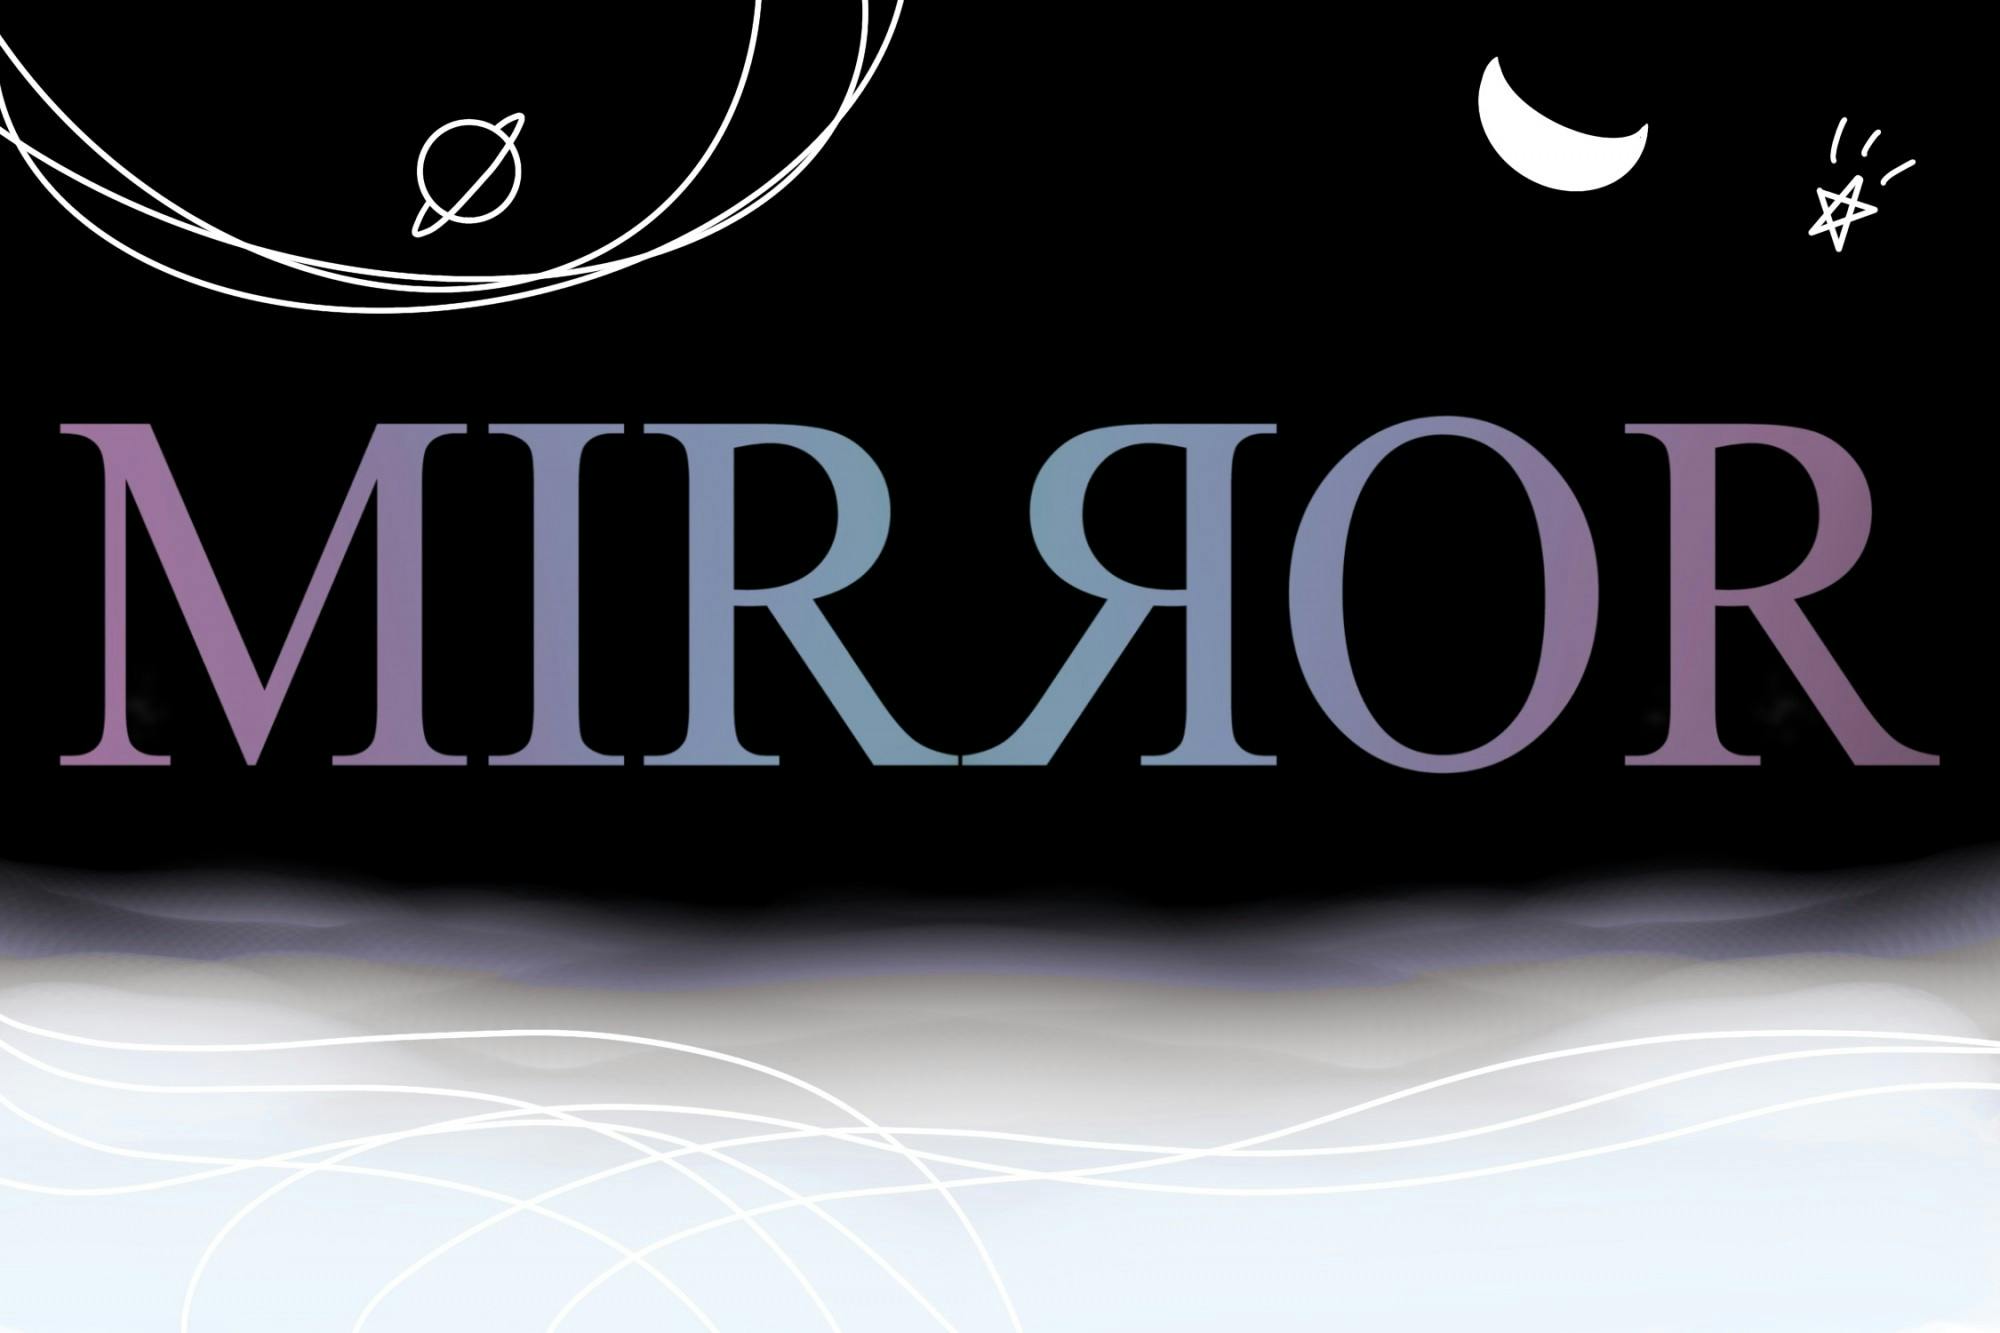 mirror cover 10.27.21.jpg